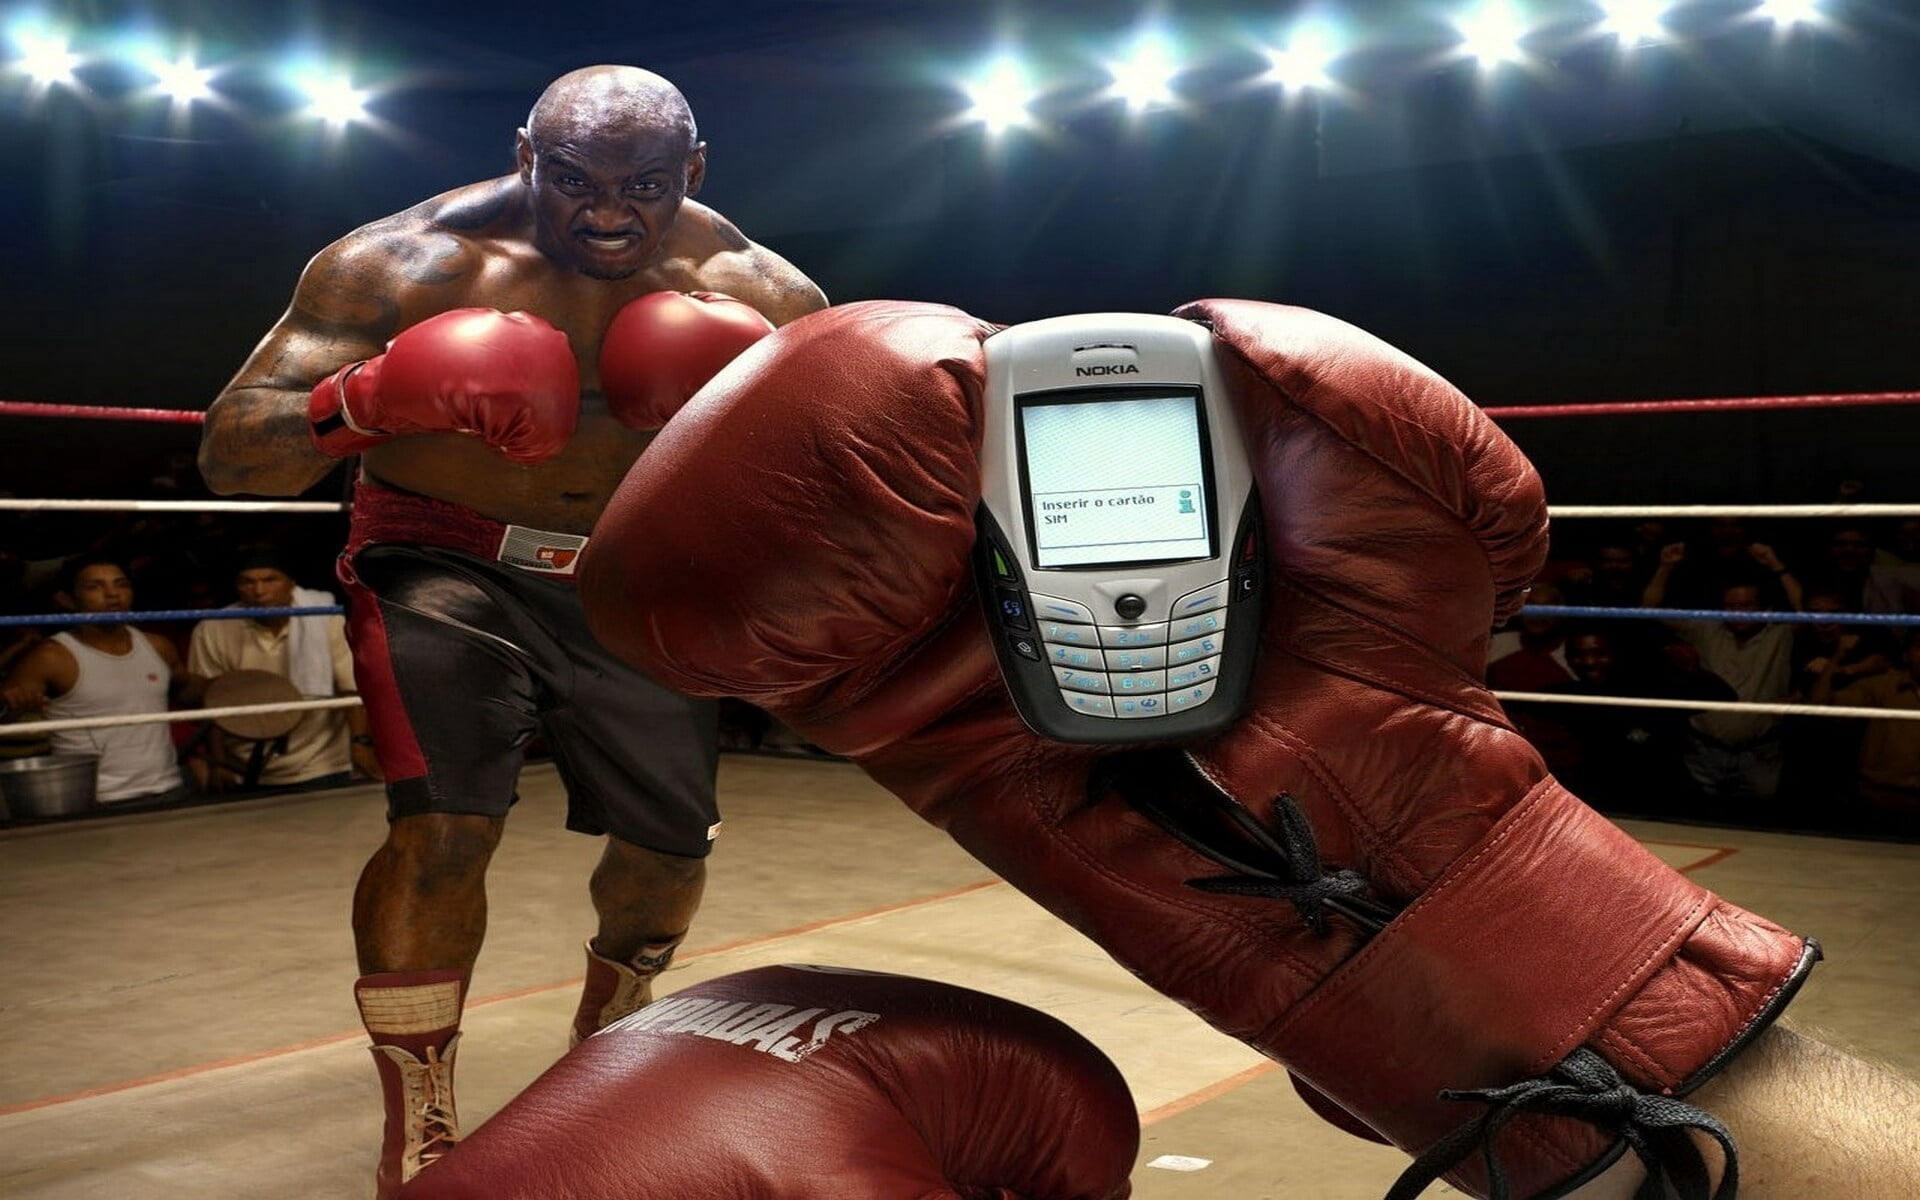 white Nokia 6600, boxing, people, hand, glove, phone, men, sport